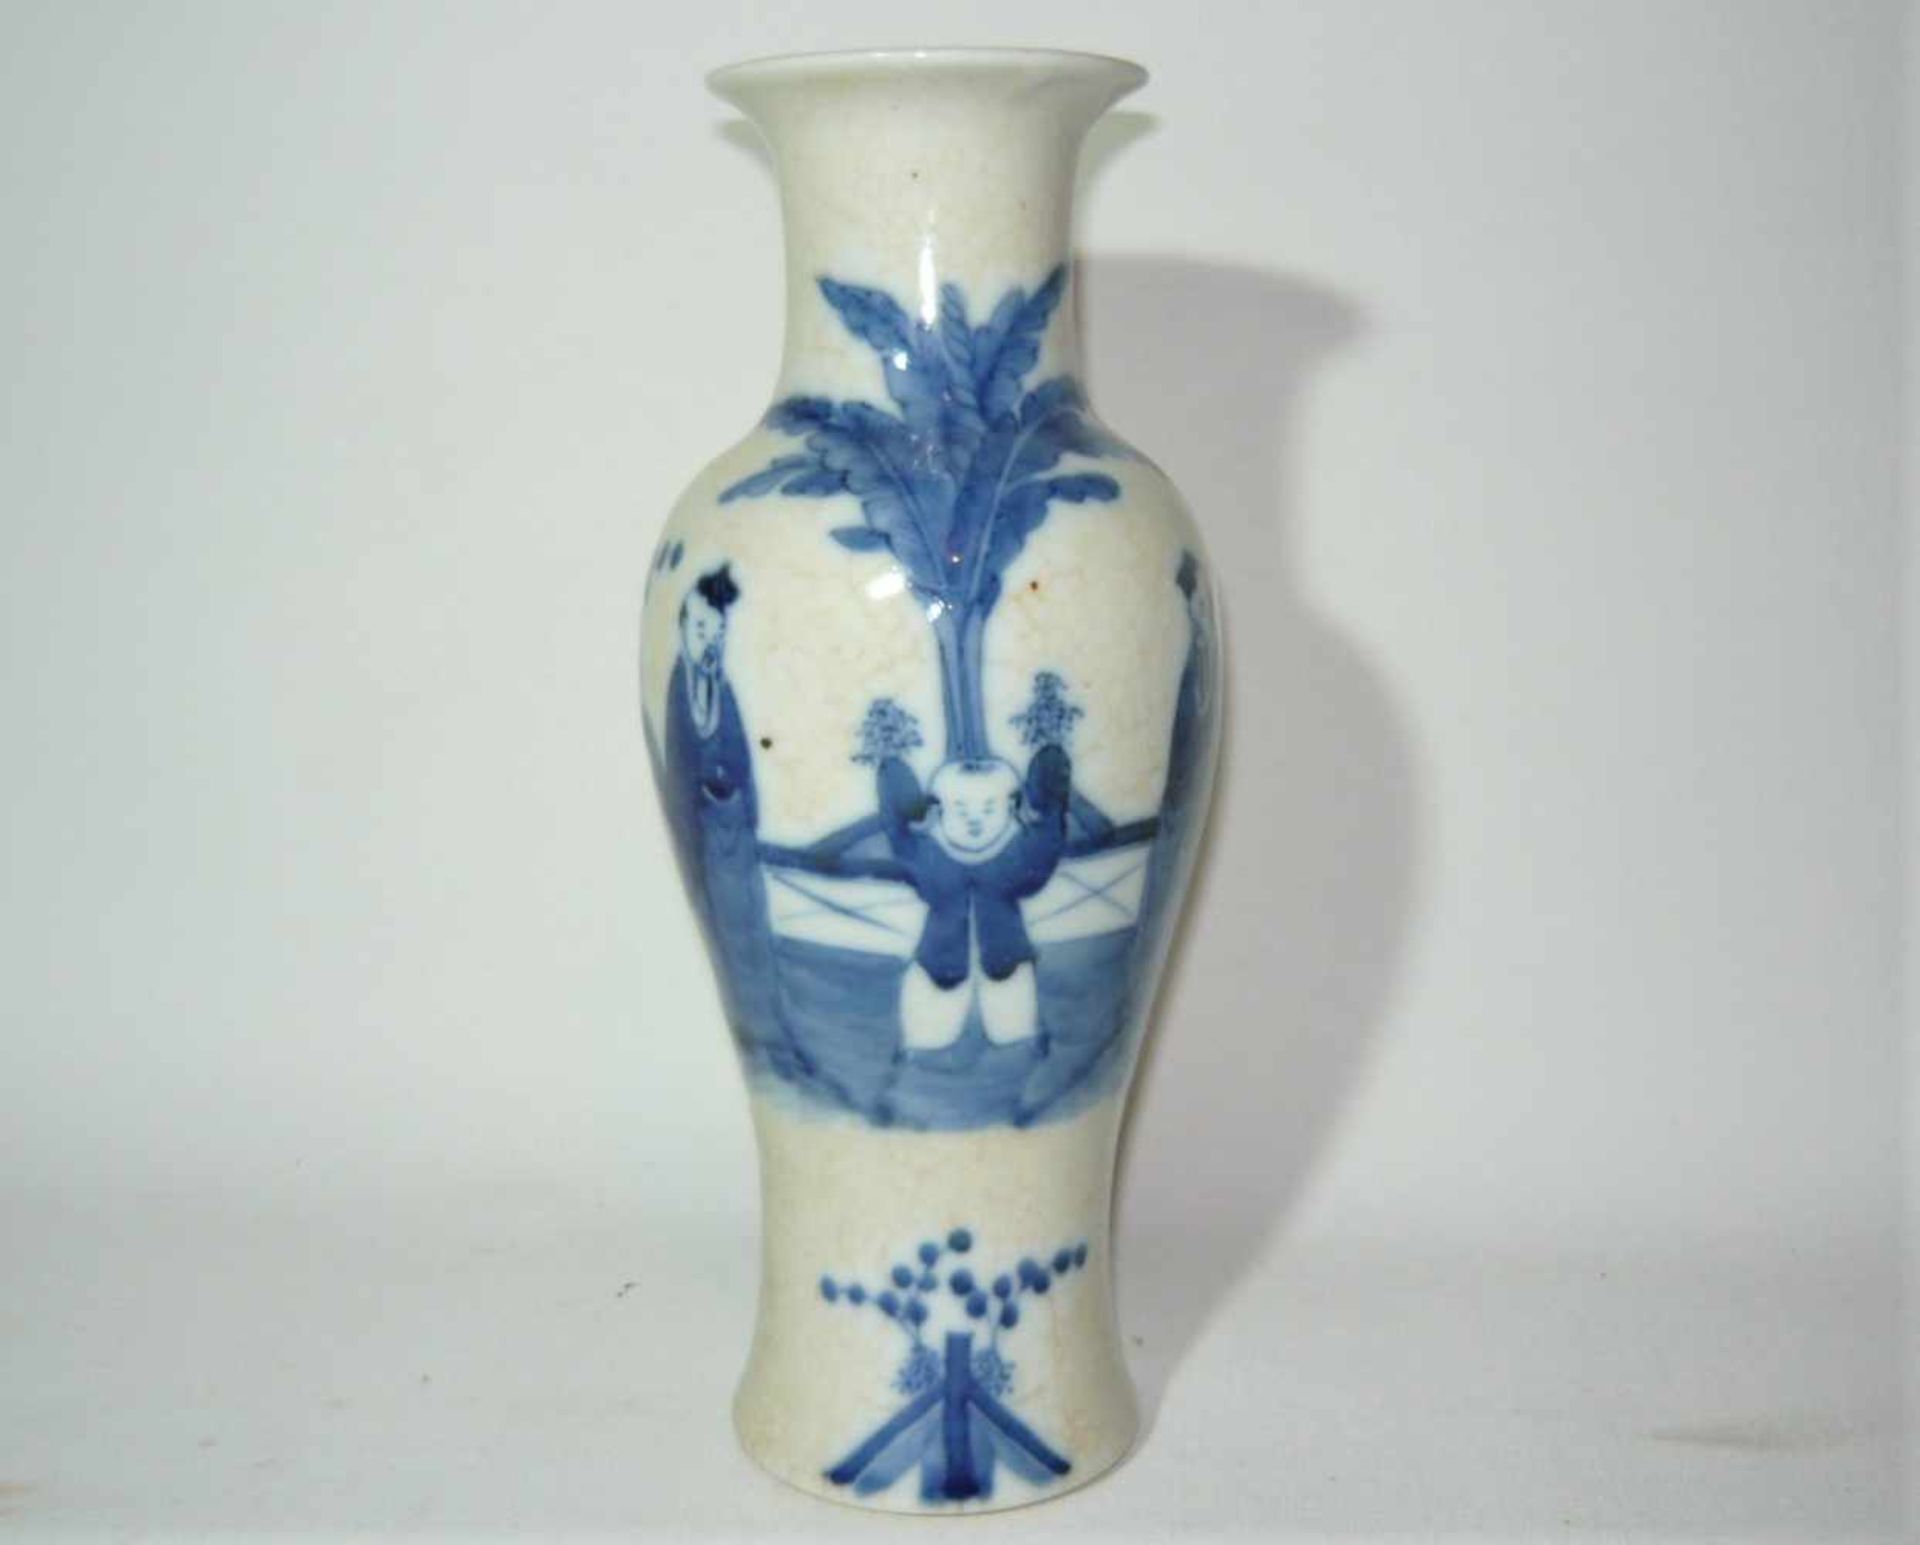 Vase mit Blaumalerei. Antik. Ca. 26cm.- - -22.00 % buyer's premium on the hammer price19.00 % VAT on